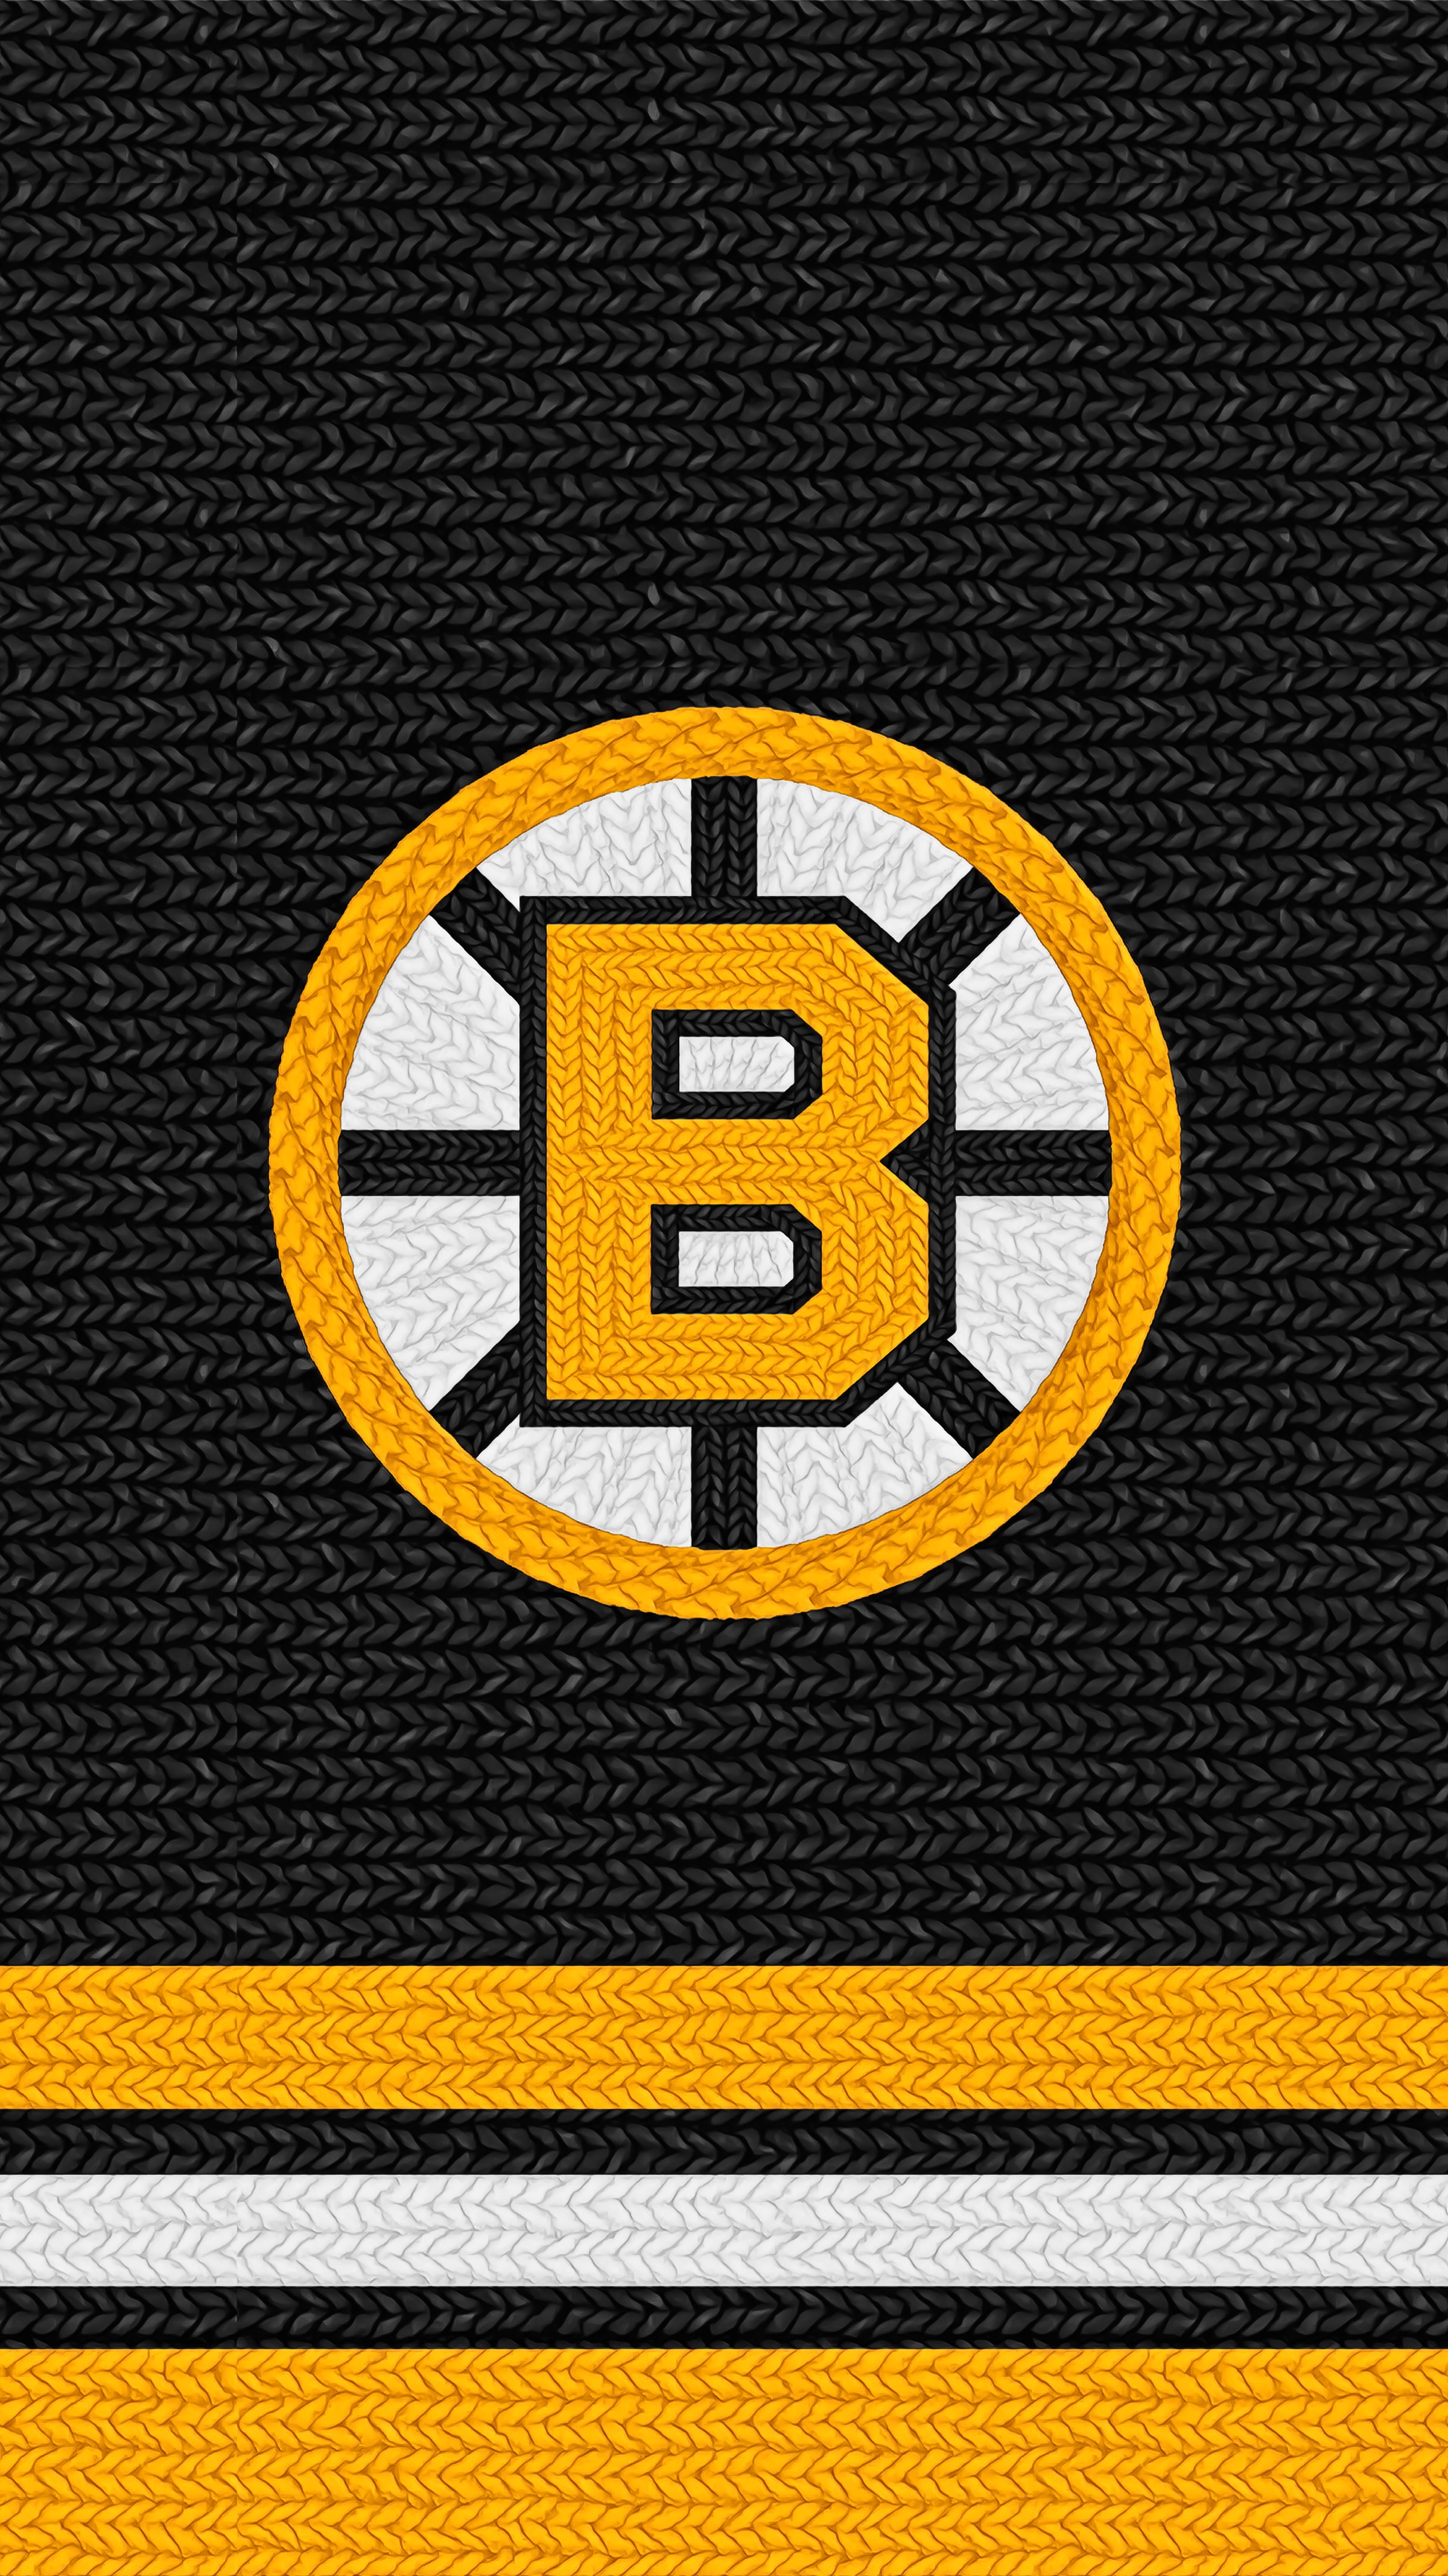 Boston Bruins Wallpapers